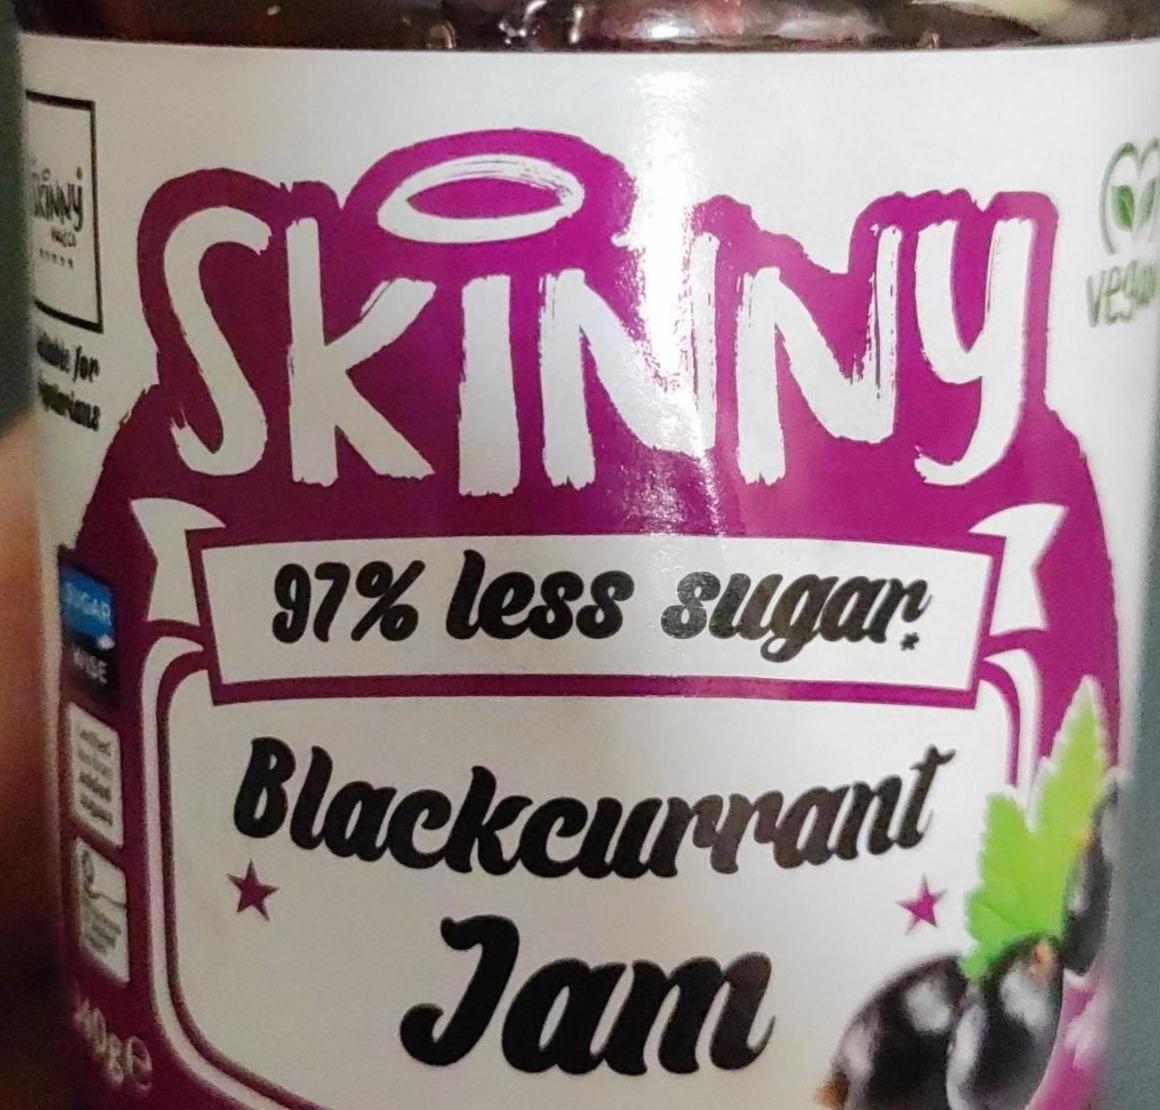 Fotografie - 97% less suger Blackcurrant Jam Skinny